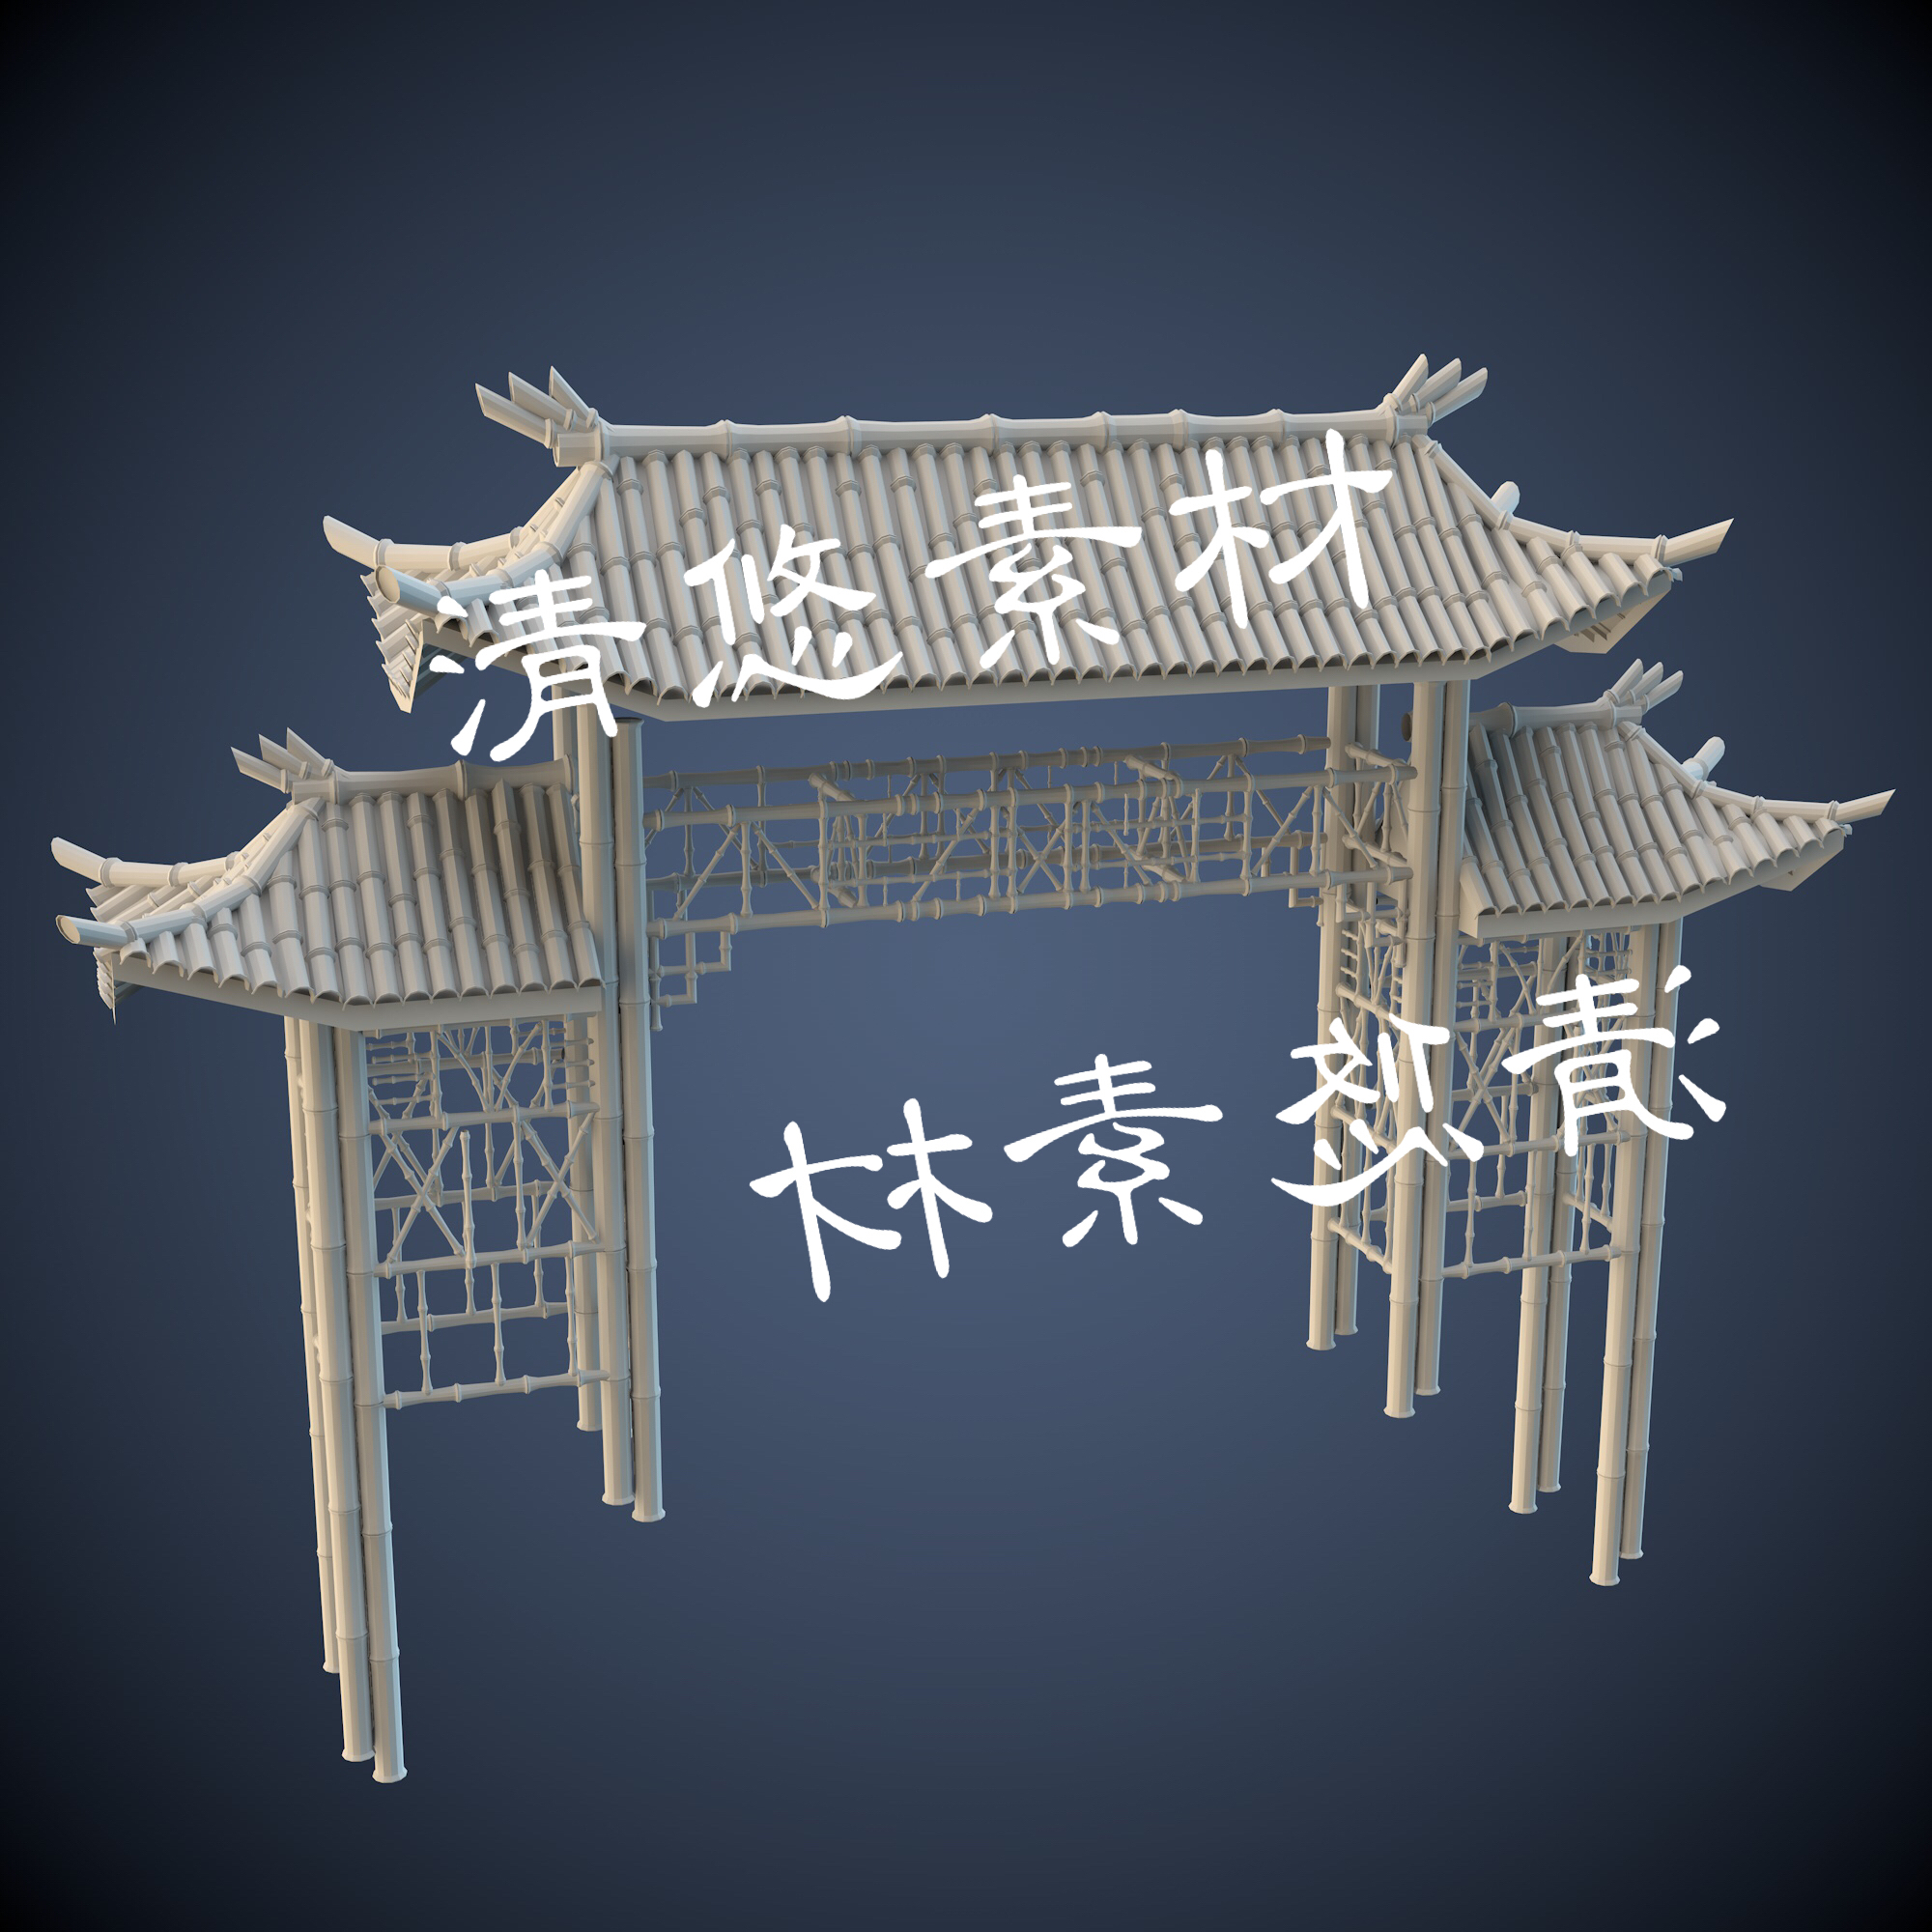 3dmax c4d fbx obj格式古代建筑竹子风格牌坊大门模型 非实物A314